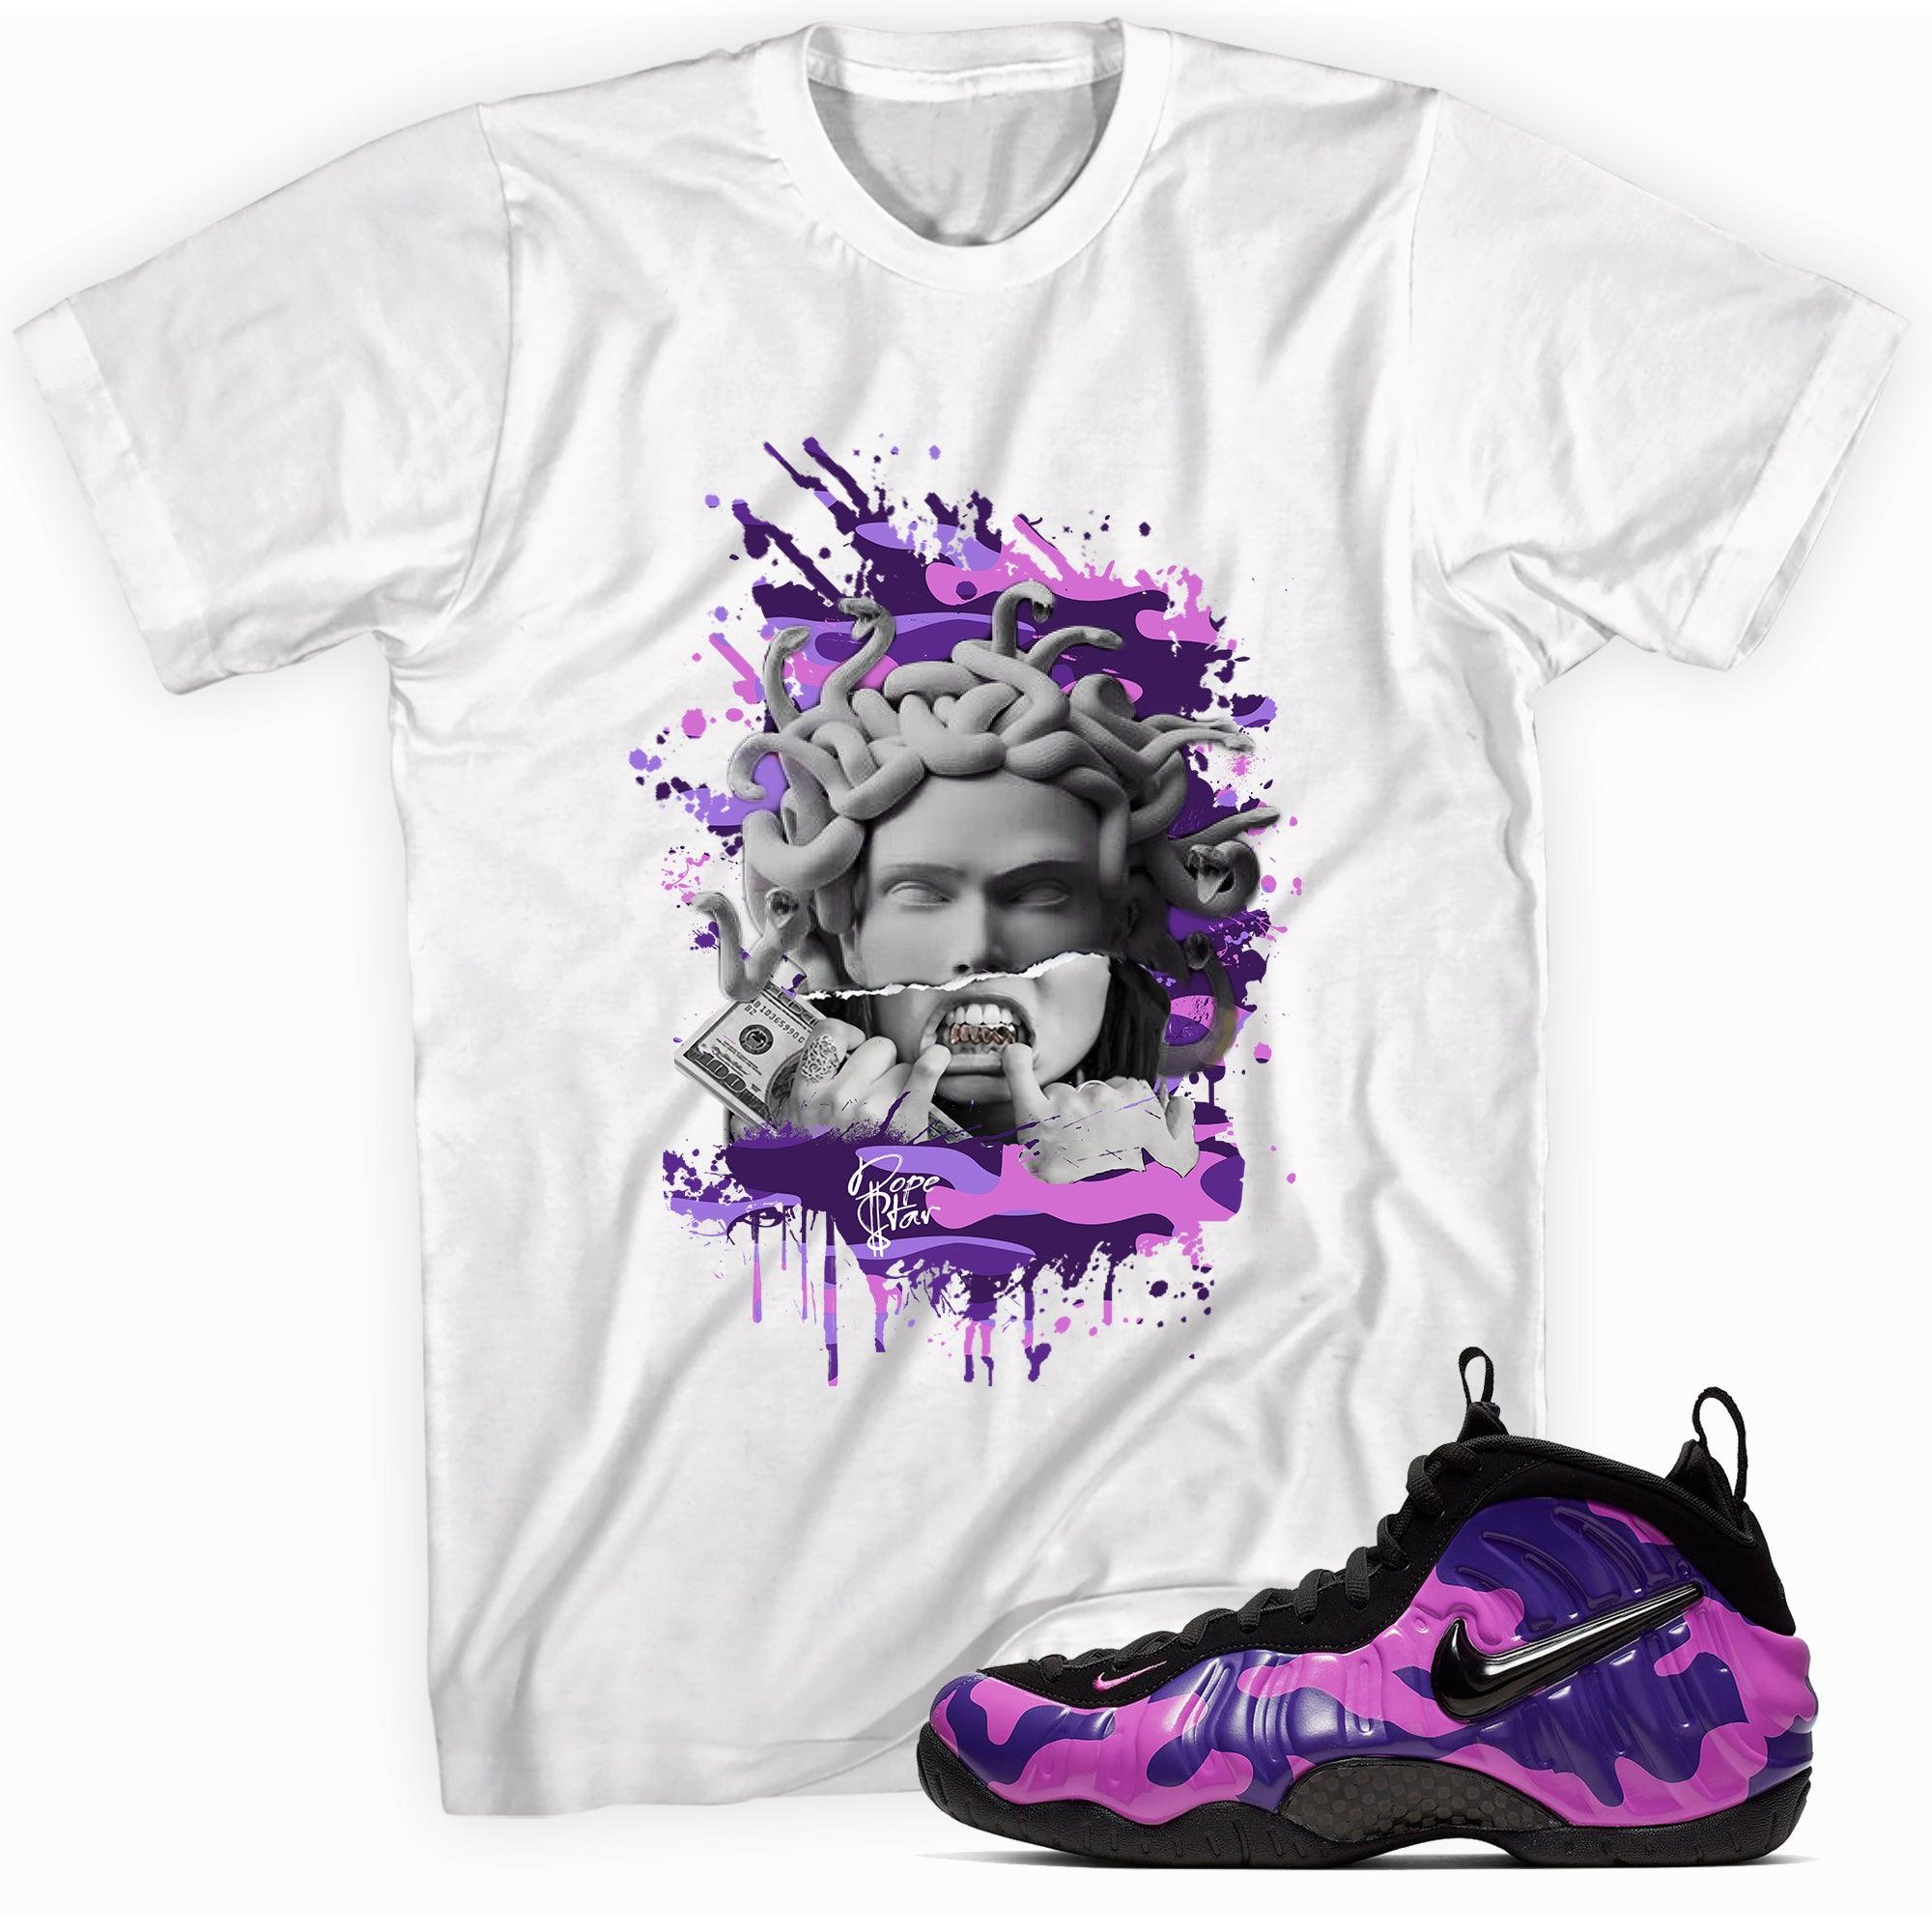 Medusa T-Shirt Air Foamposite Ones Purple Camo photo